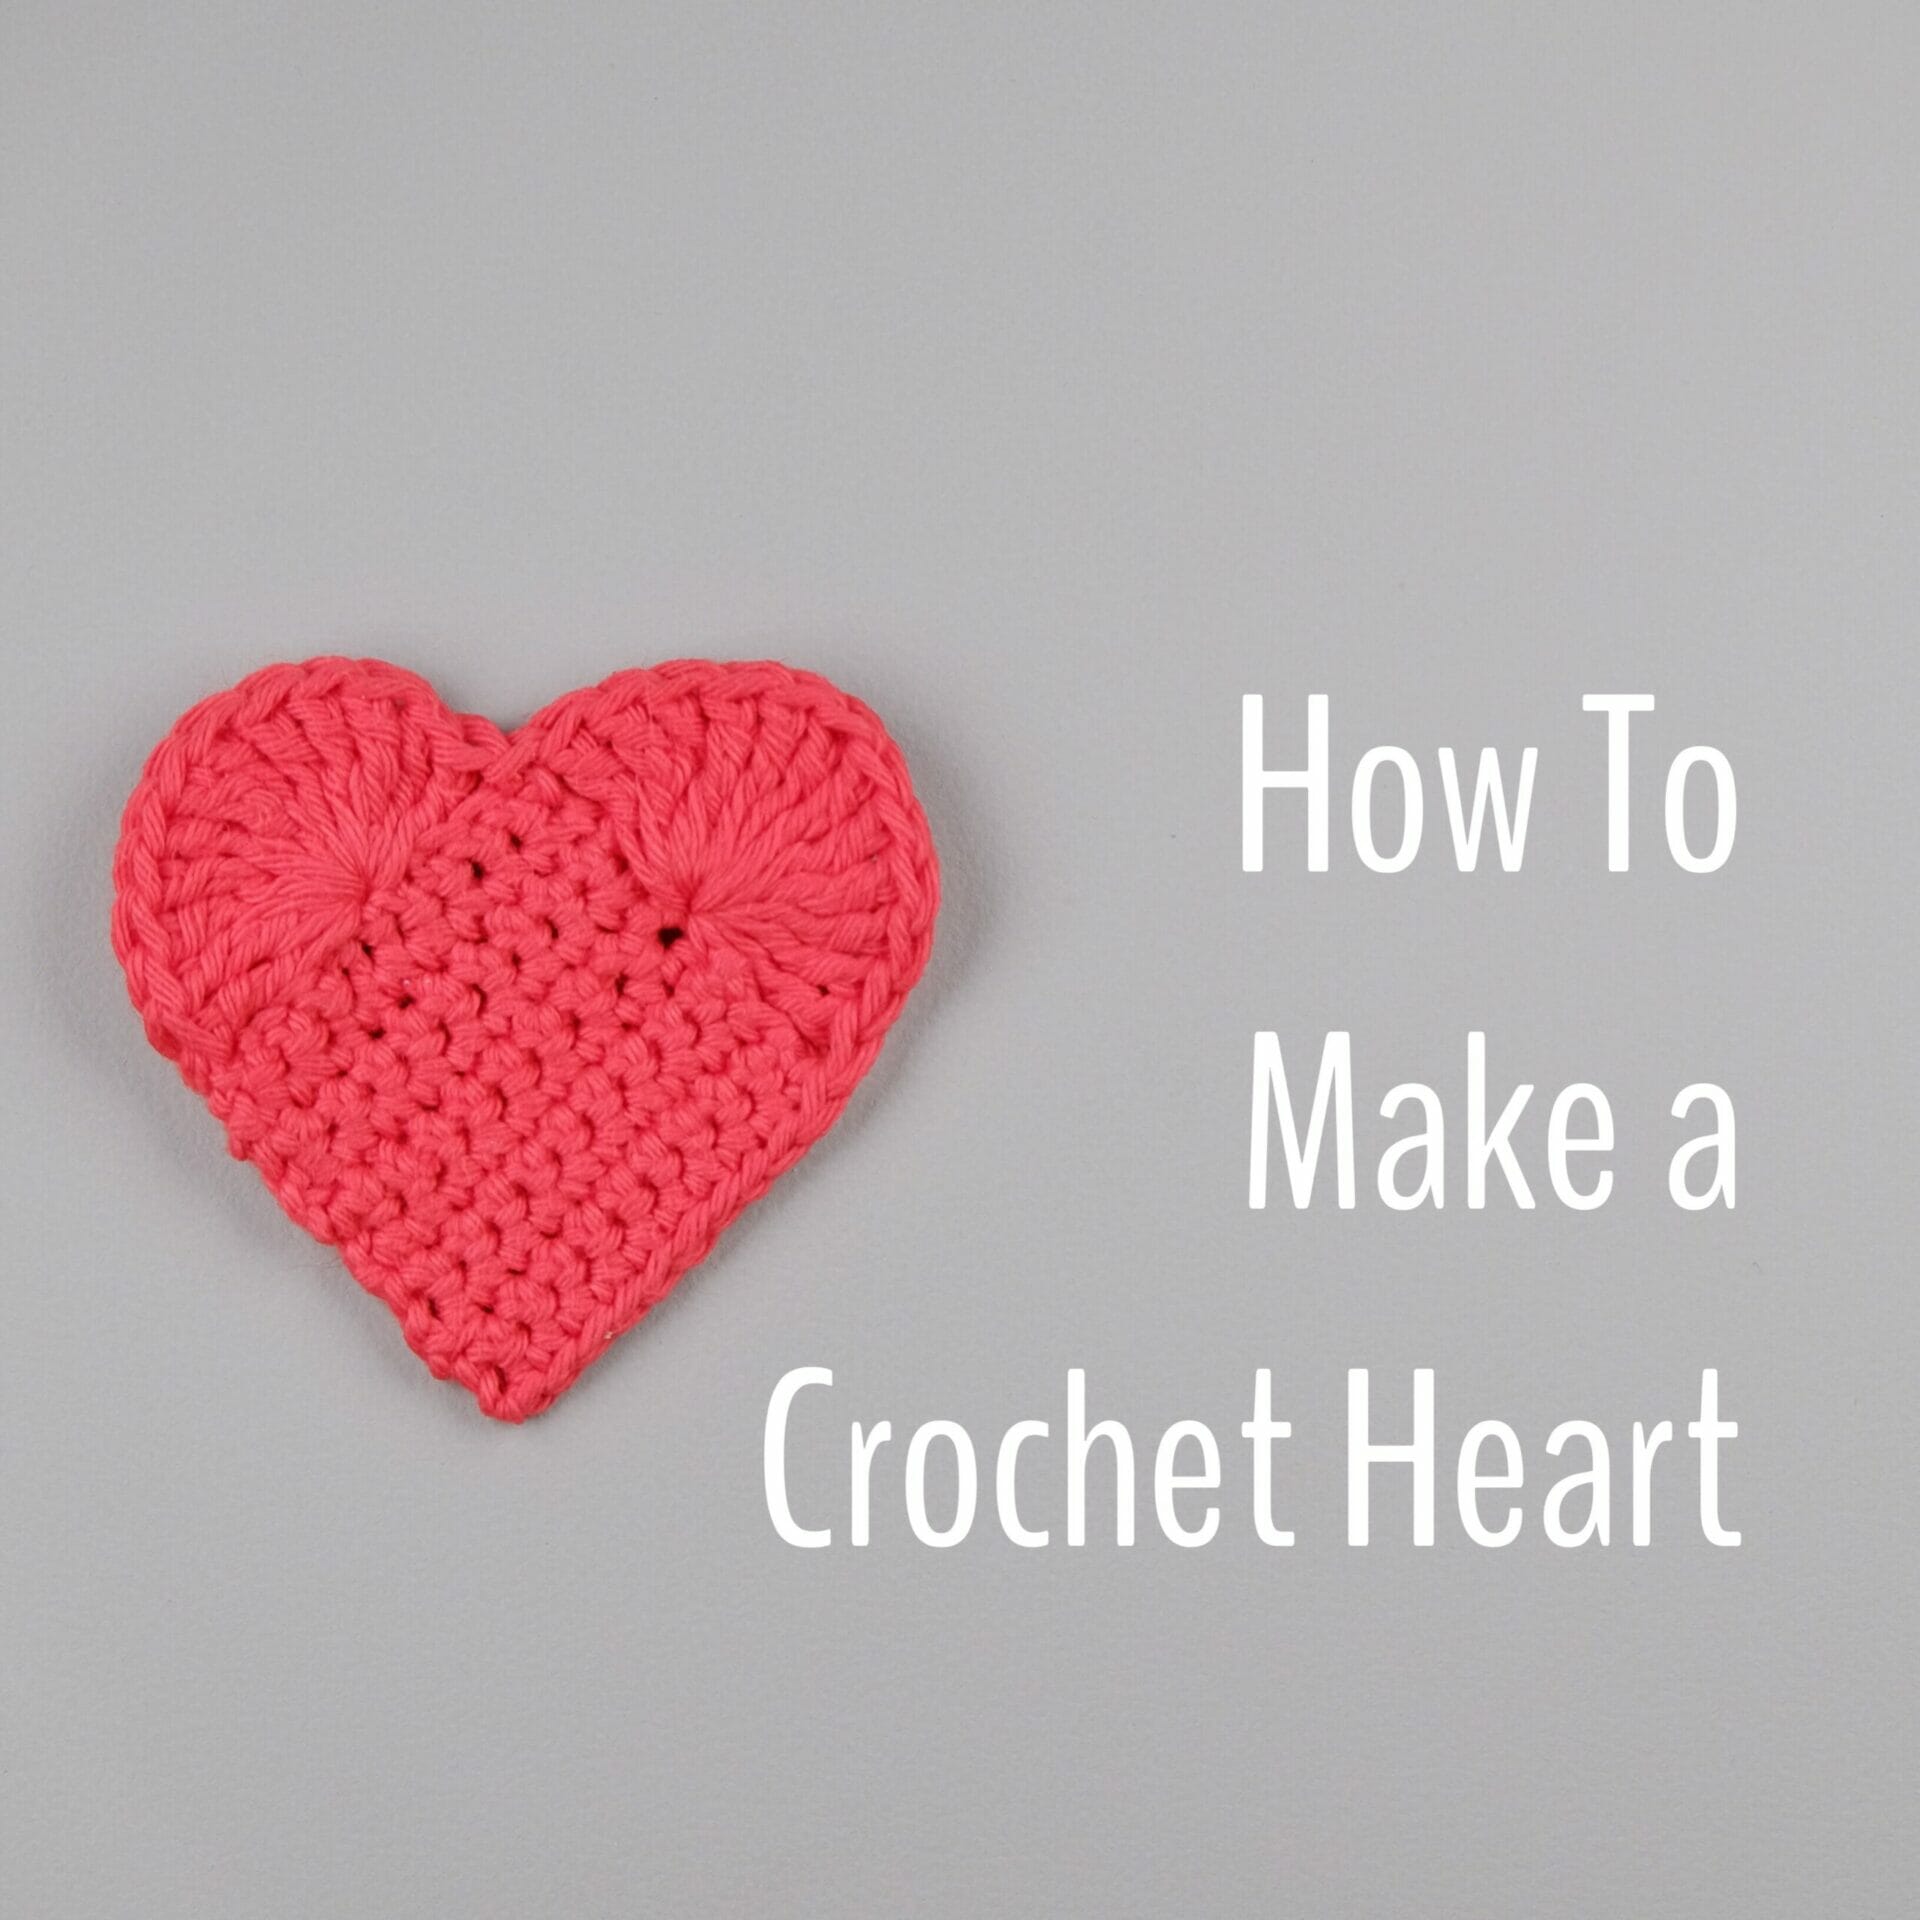 Photo Gallery of my Basic Crochet Heart